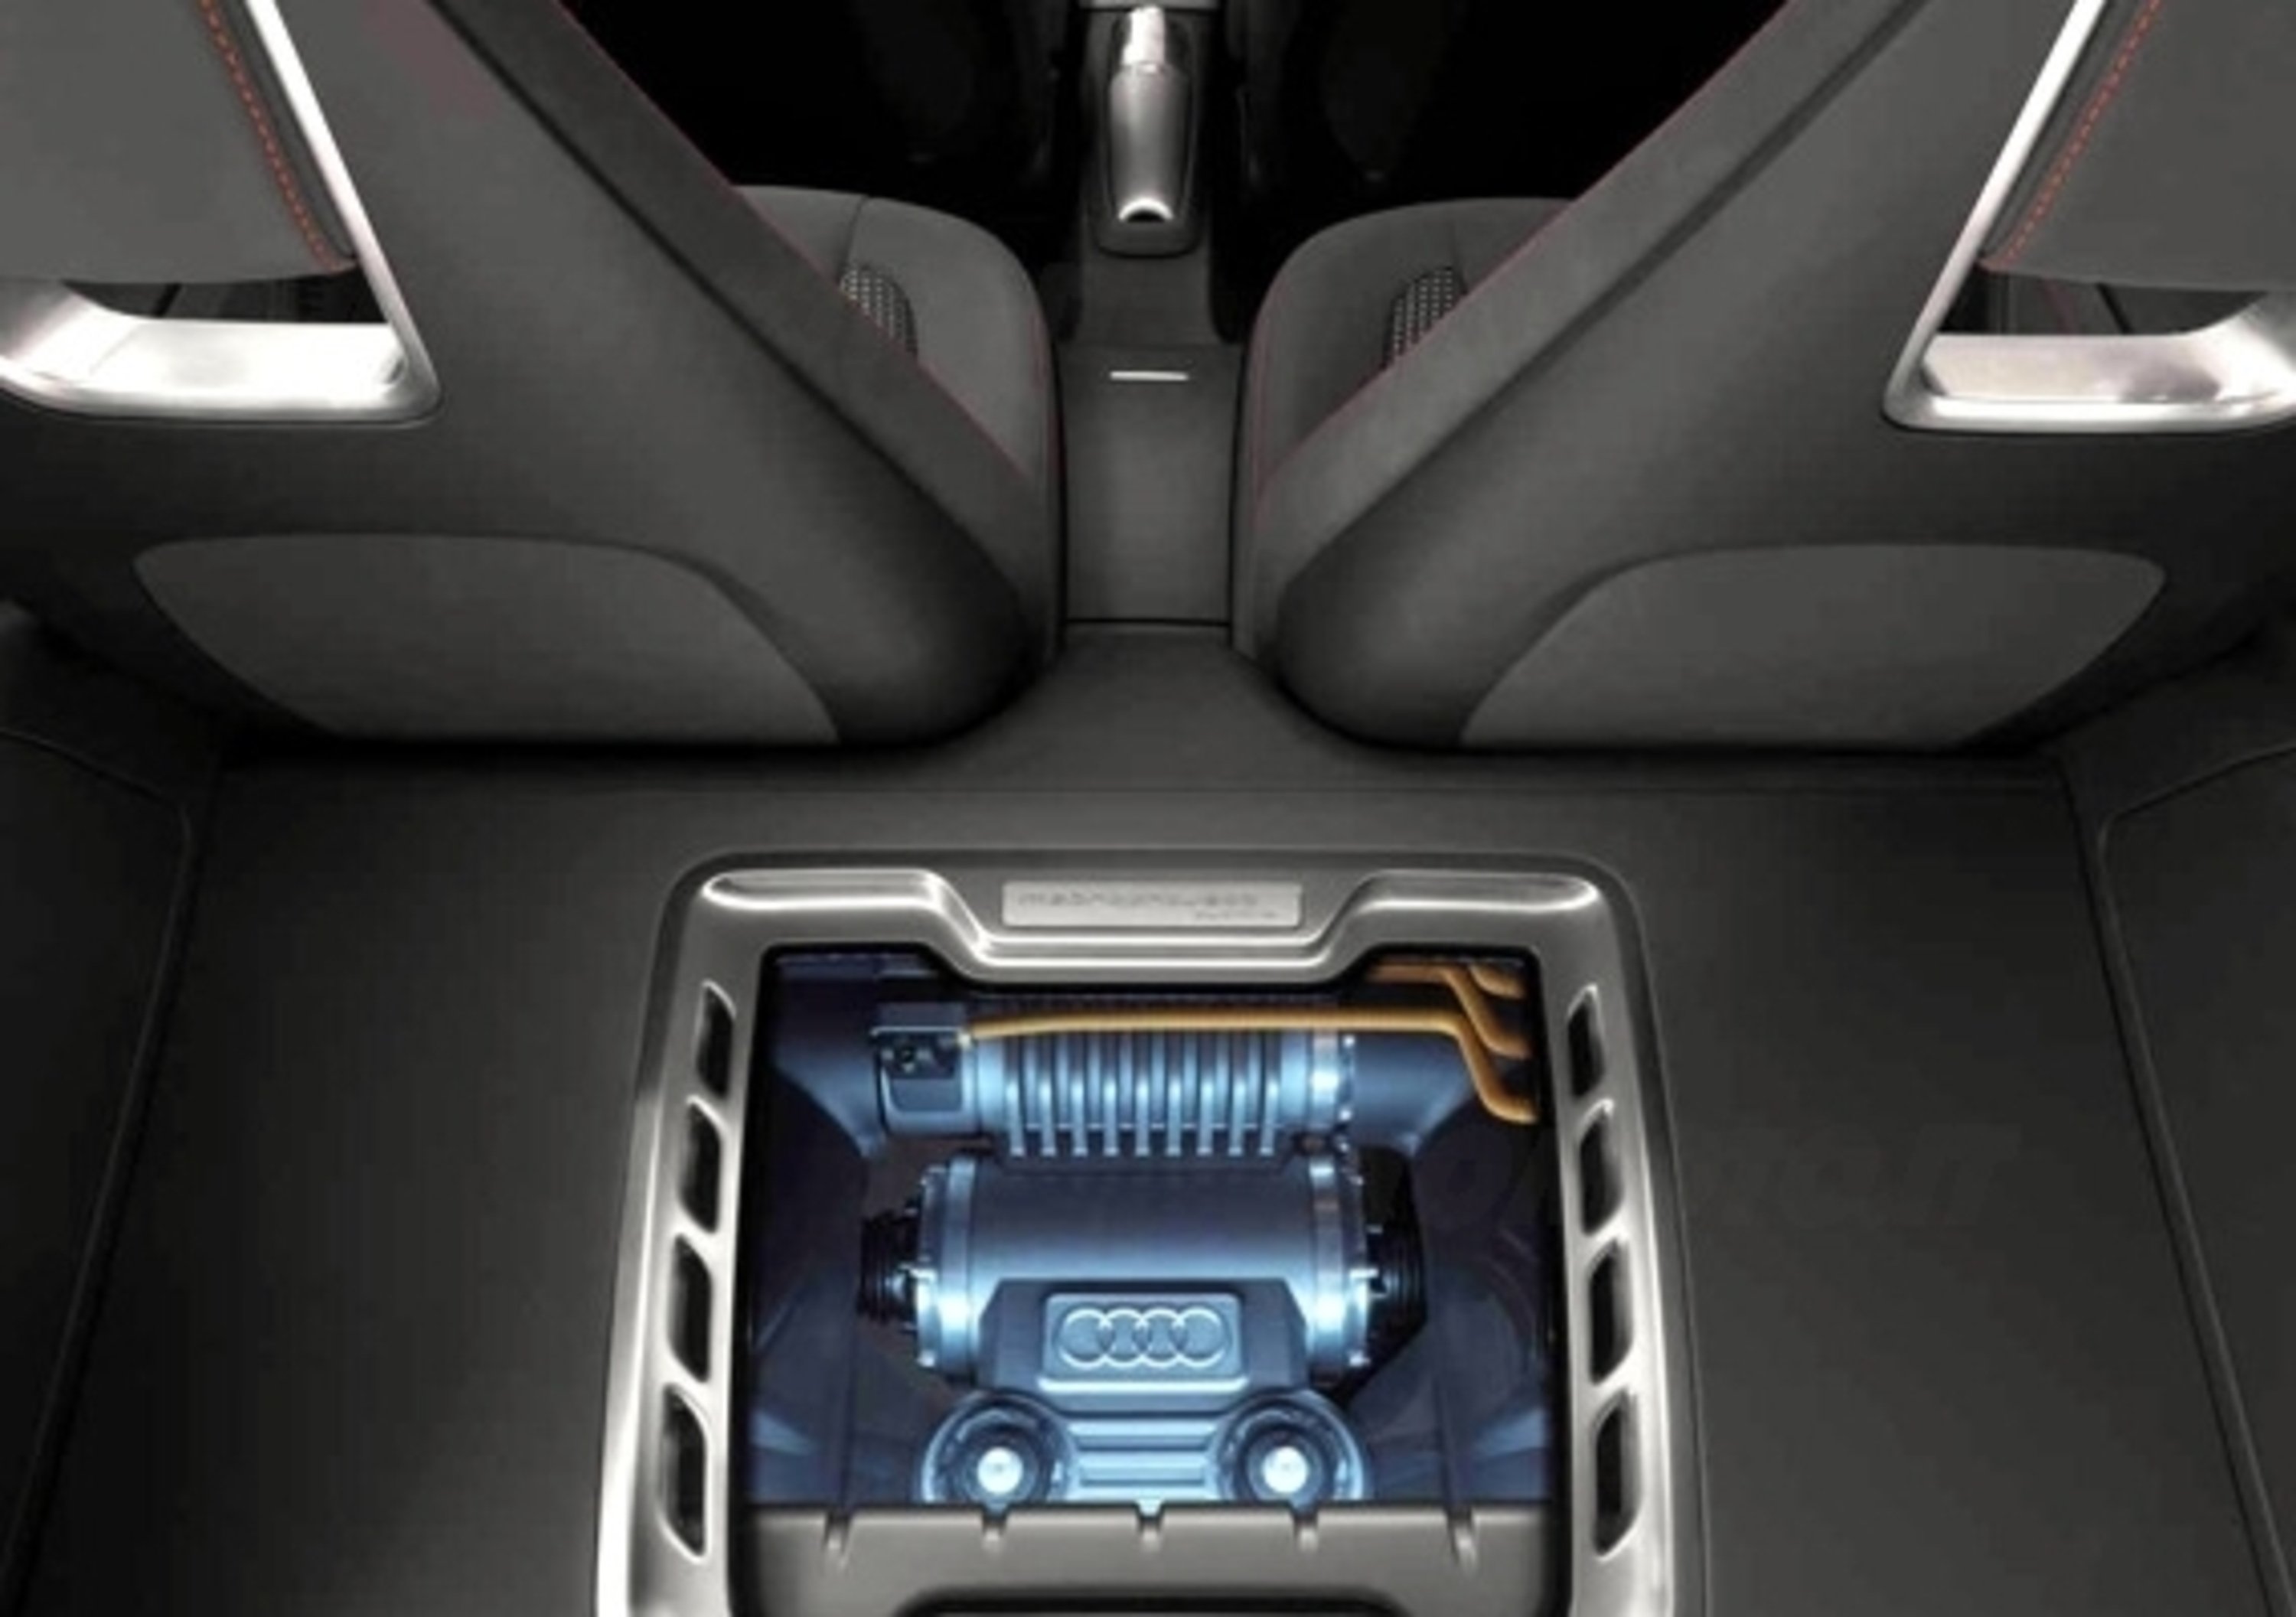 Audi A1 Quattro Concept